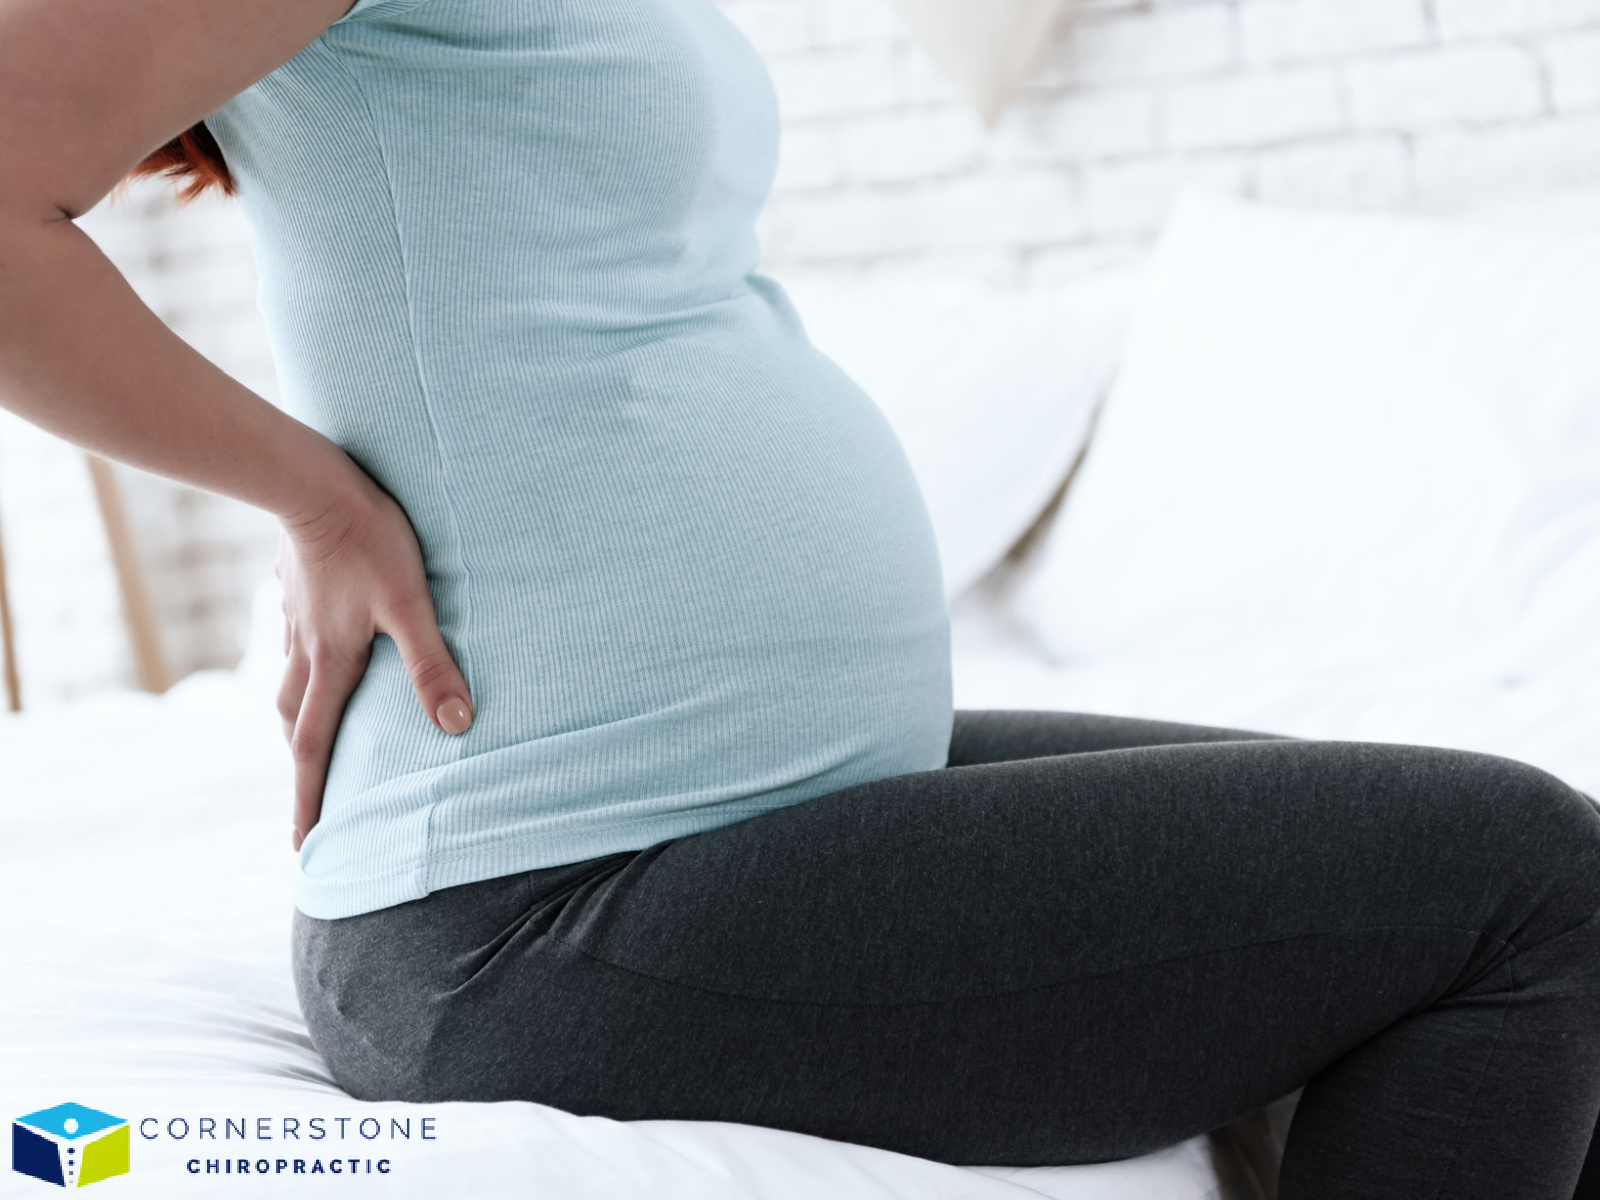 Prenatal Chiropractic Adjustments: Safety and Benefits